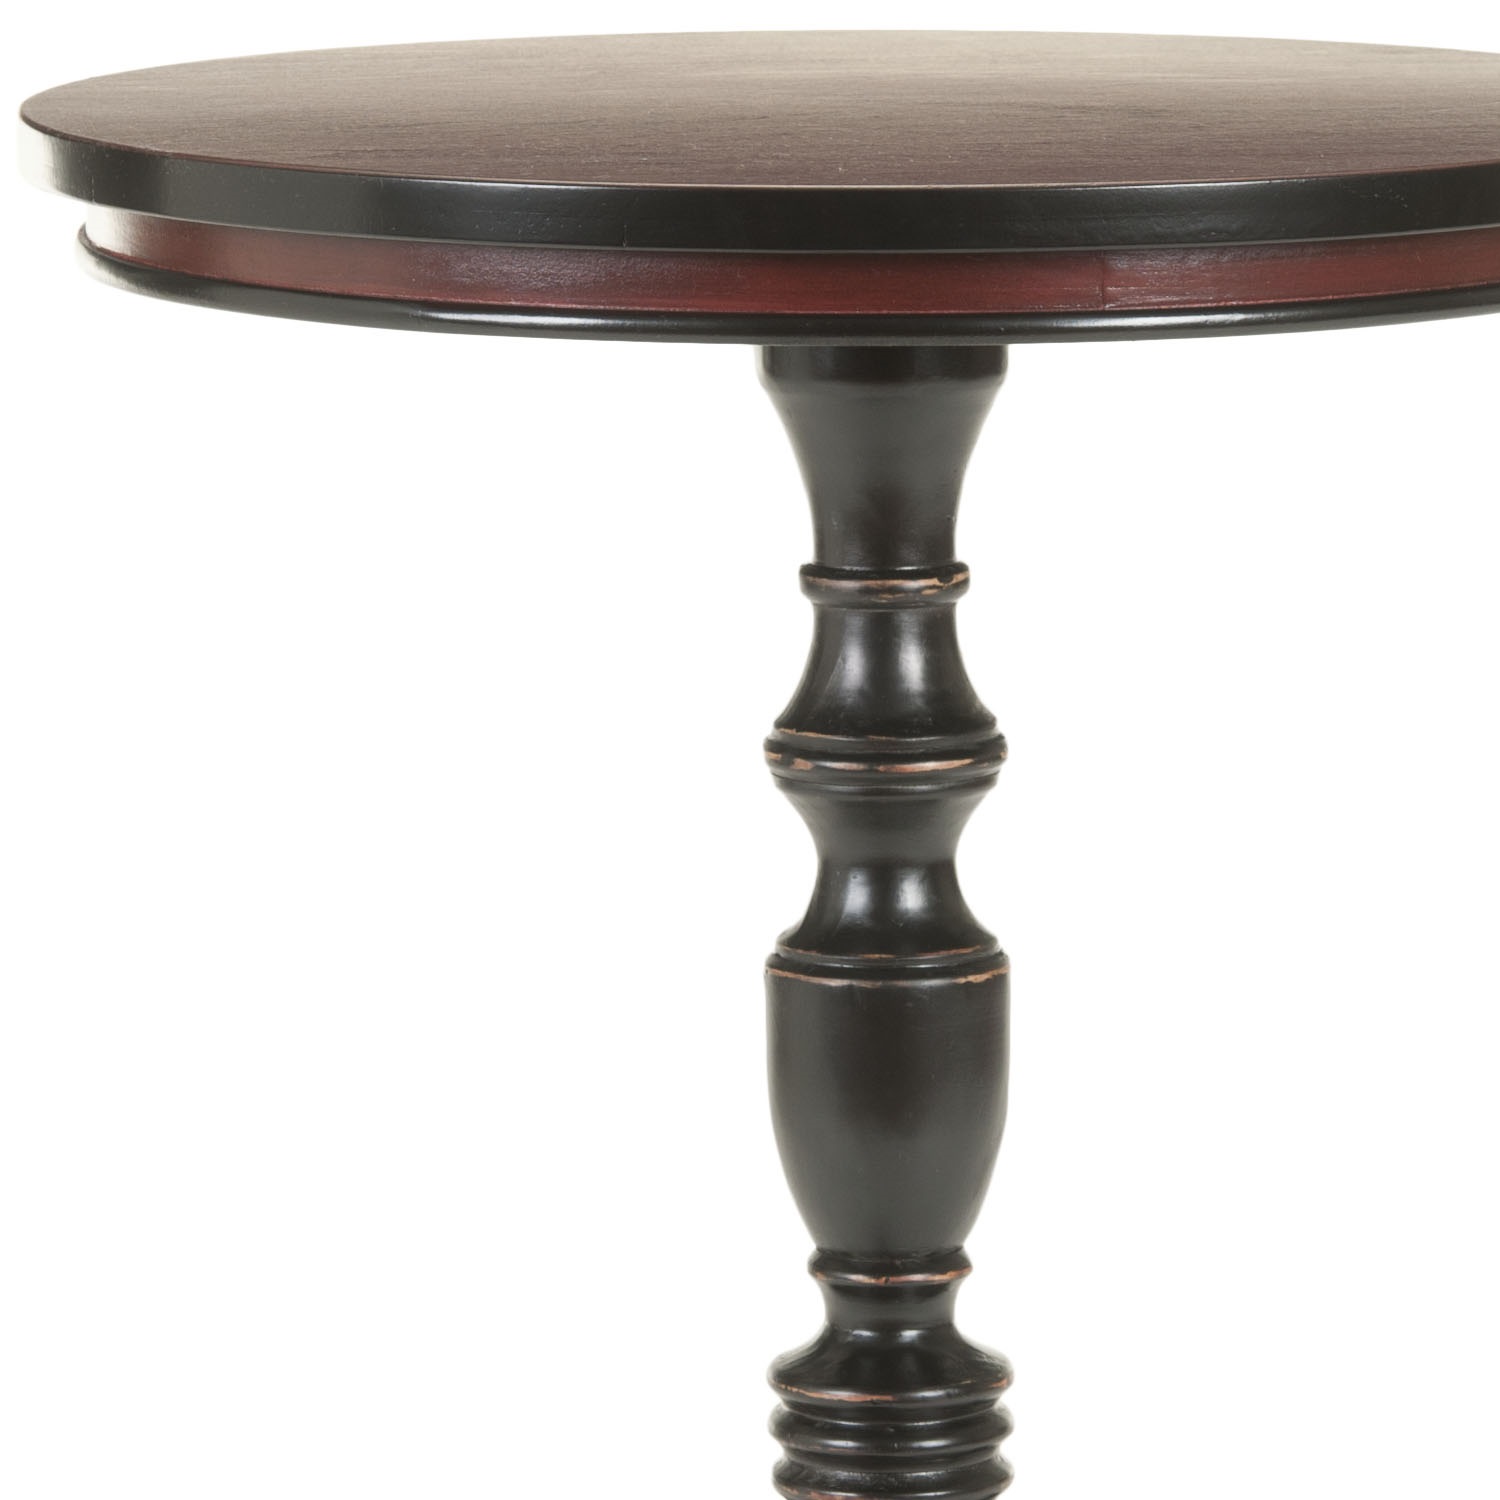 Safavieh Blake Side Table, Brown - image 2 of 4